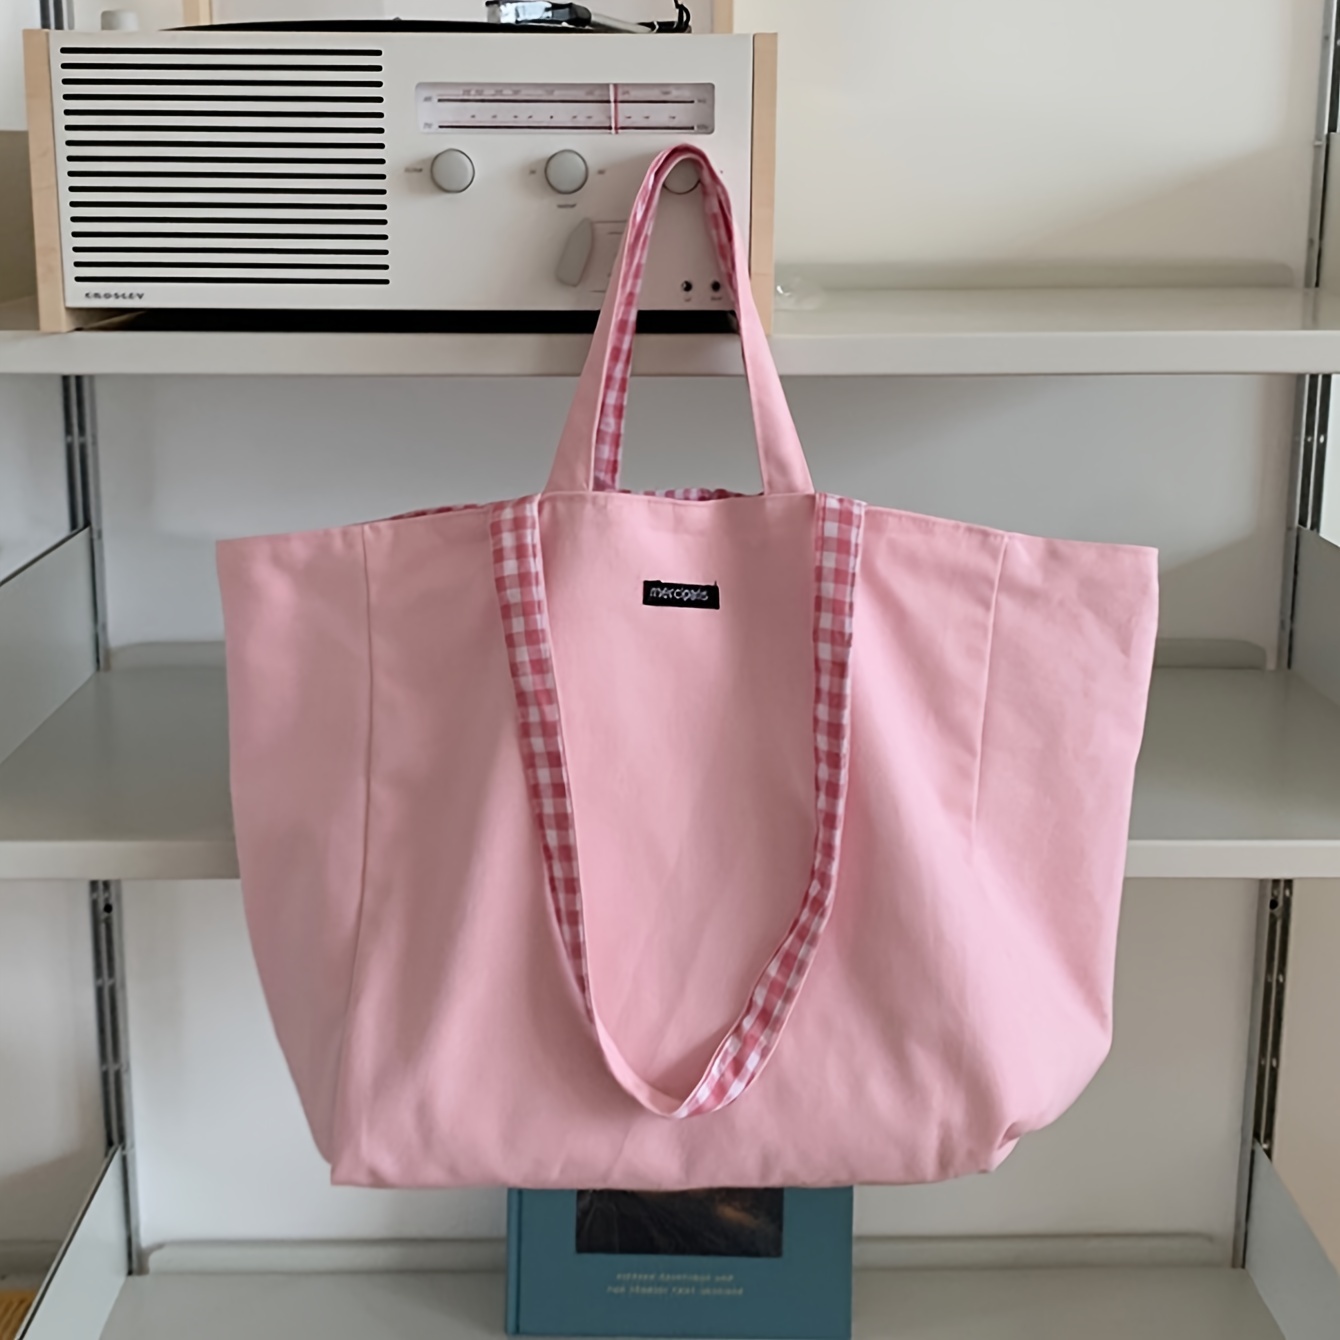 

Reversible Canvas Tote Bag, Plaid Pattern Shoulder Bag, Double-sided Handbag For School Work Travel Shopping